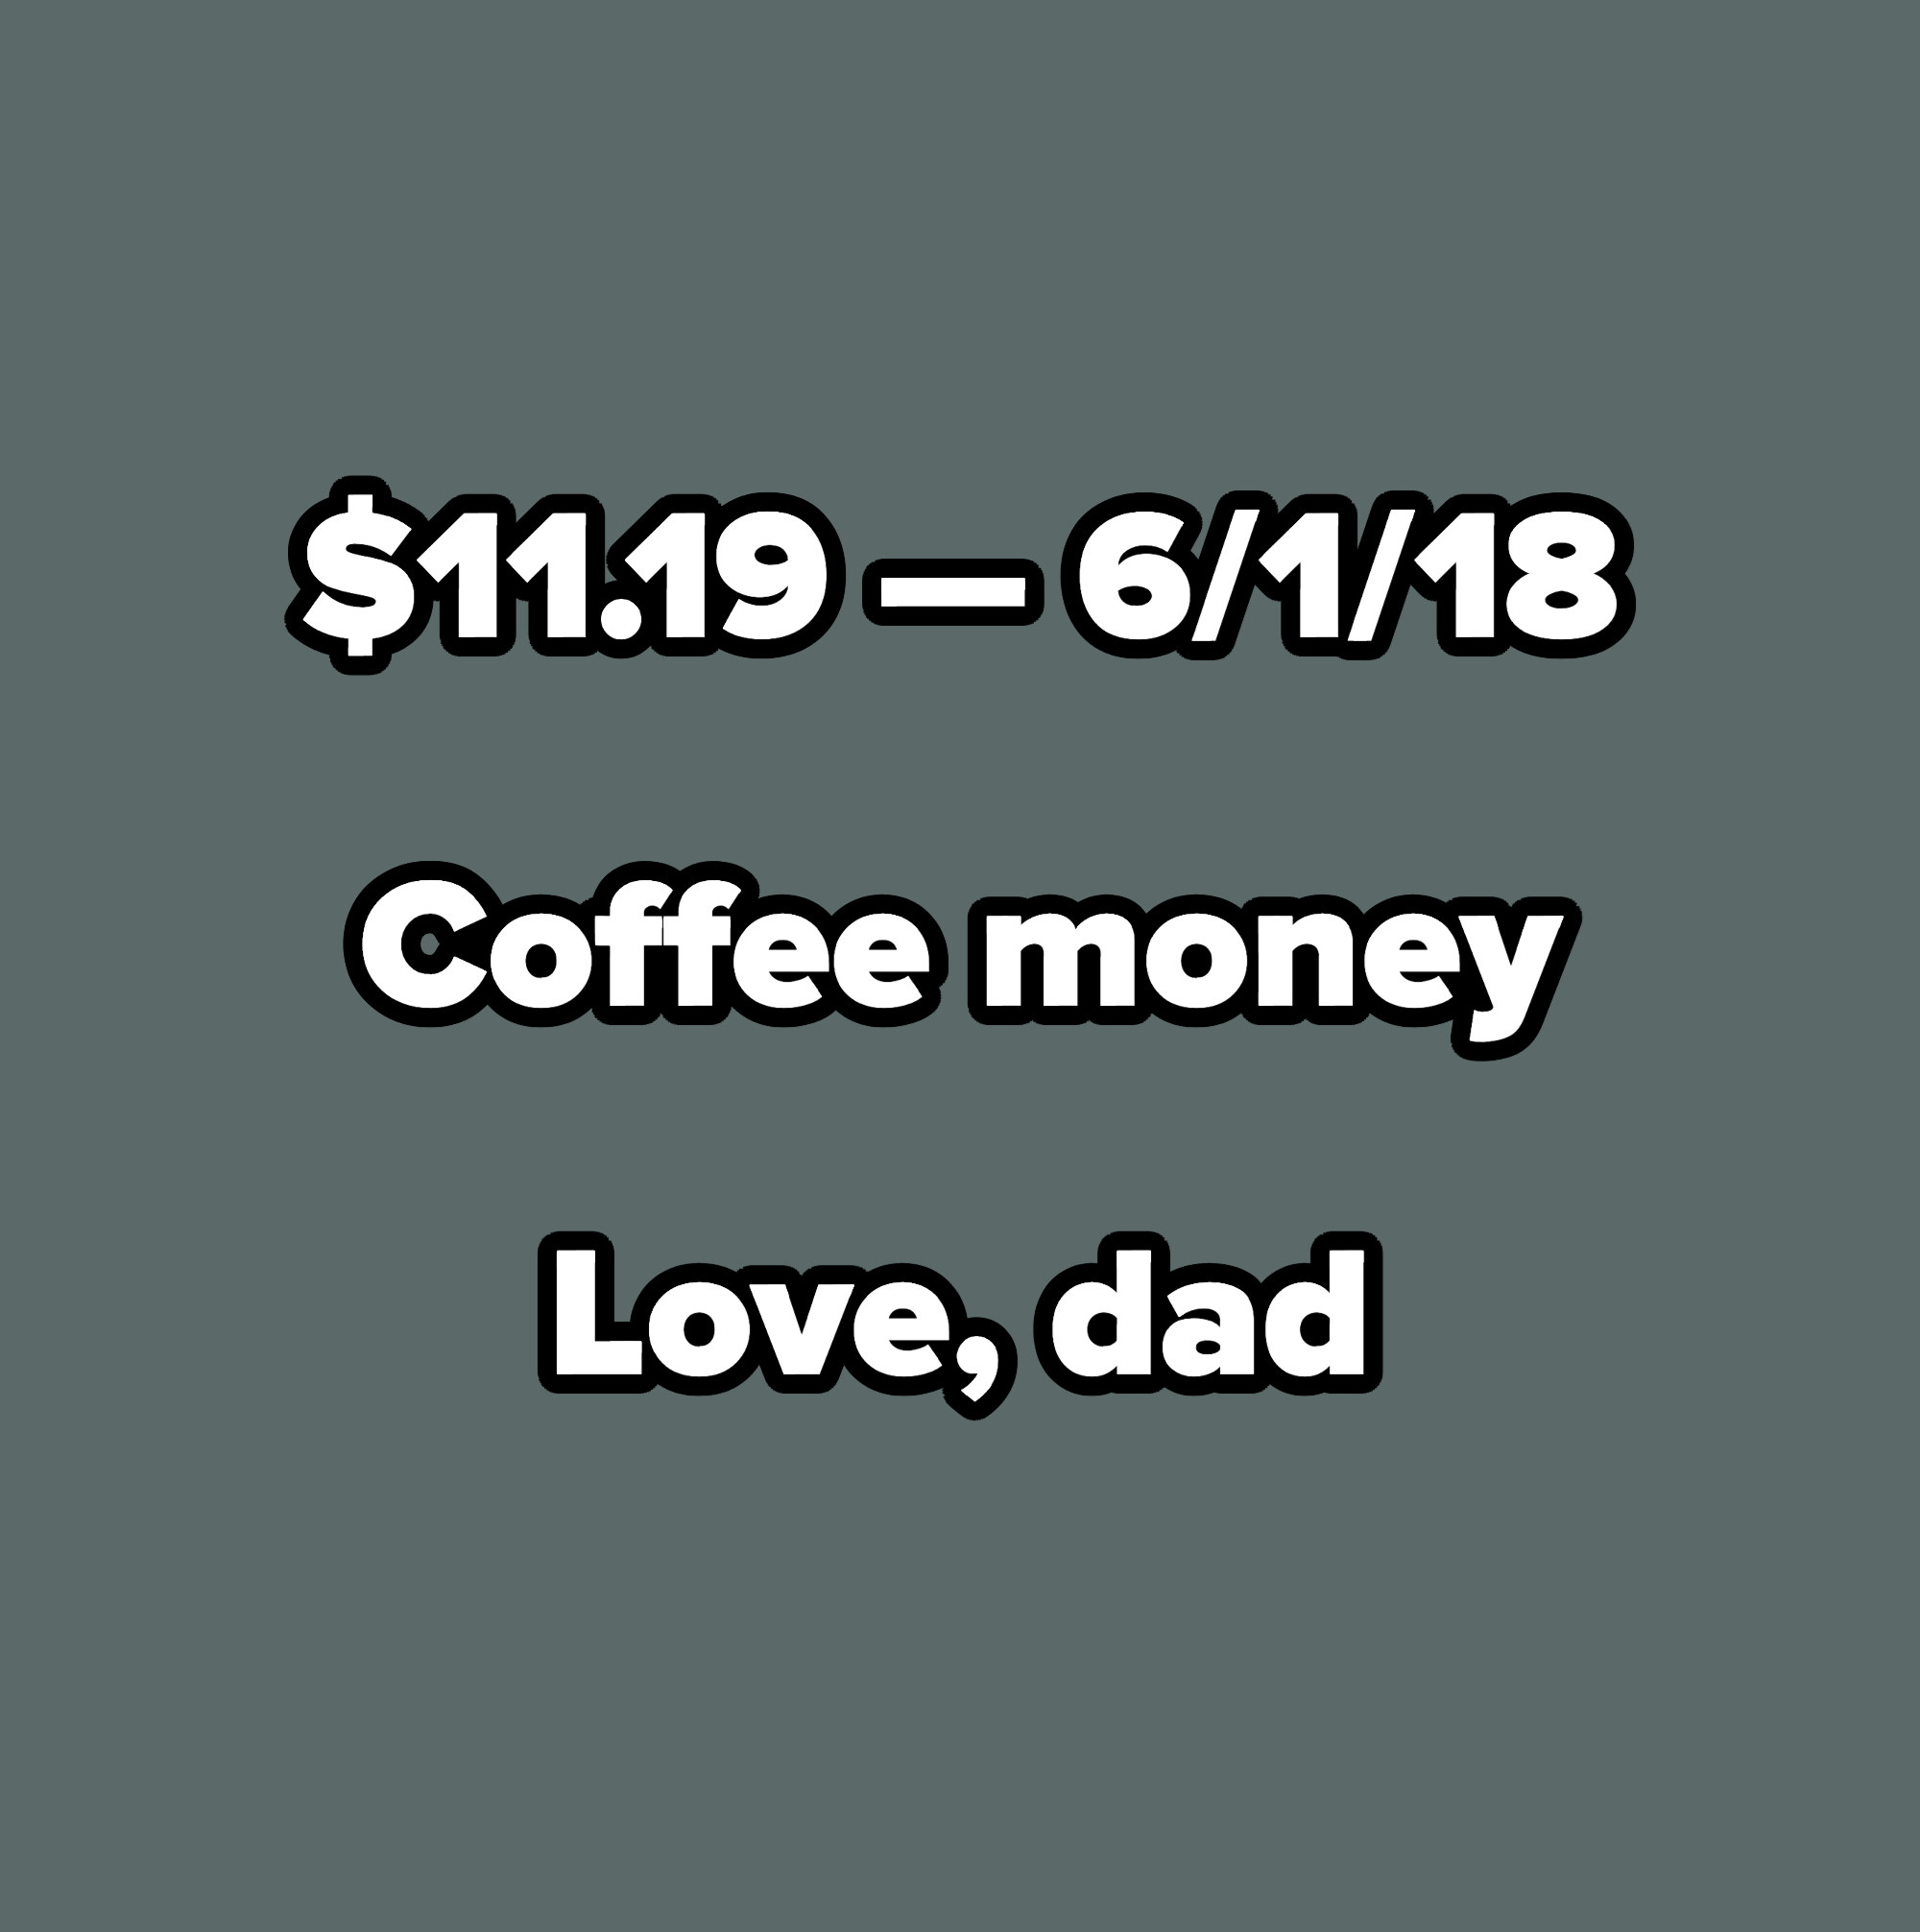 Dad&#x27;s note: &quot;$11.19 — 6/1/18. Coffee money. Love, dad&quot;